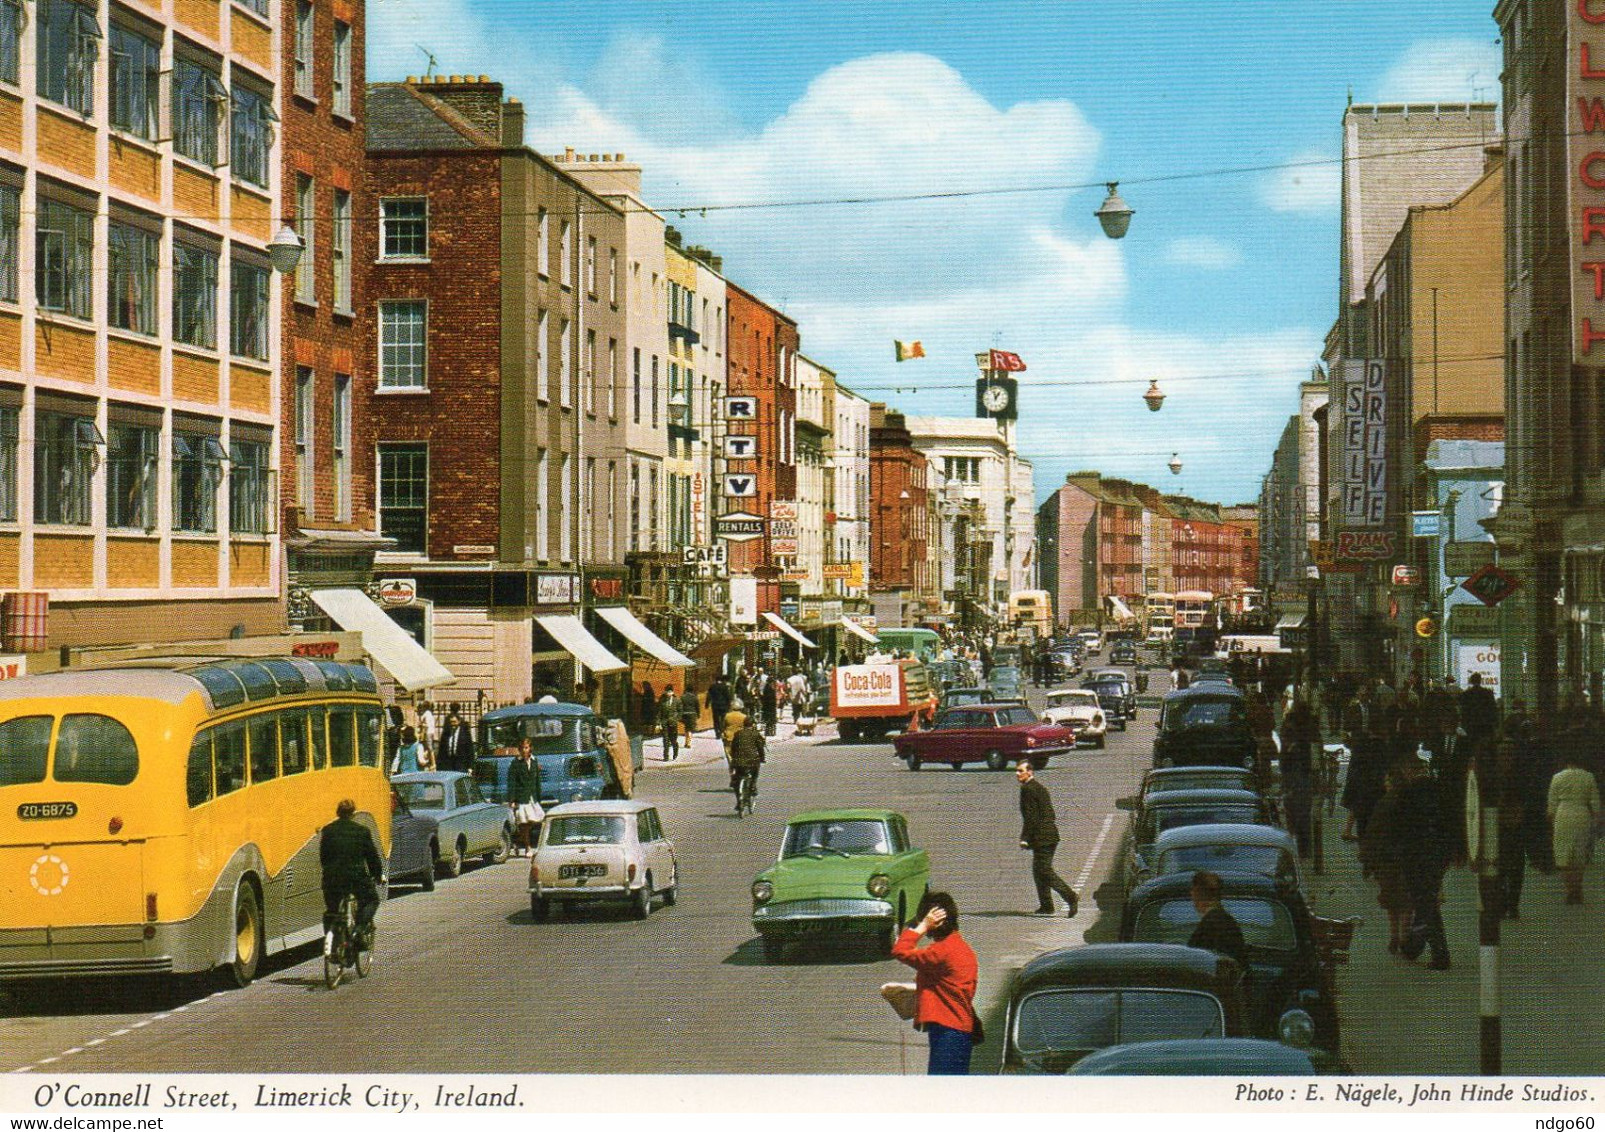 Limerick City - O' Connell Street - Limerick